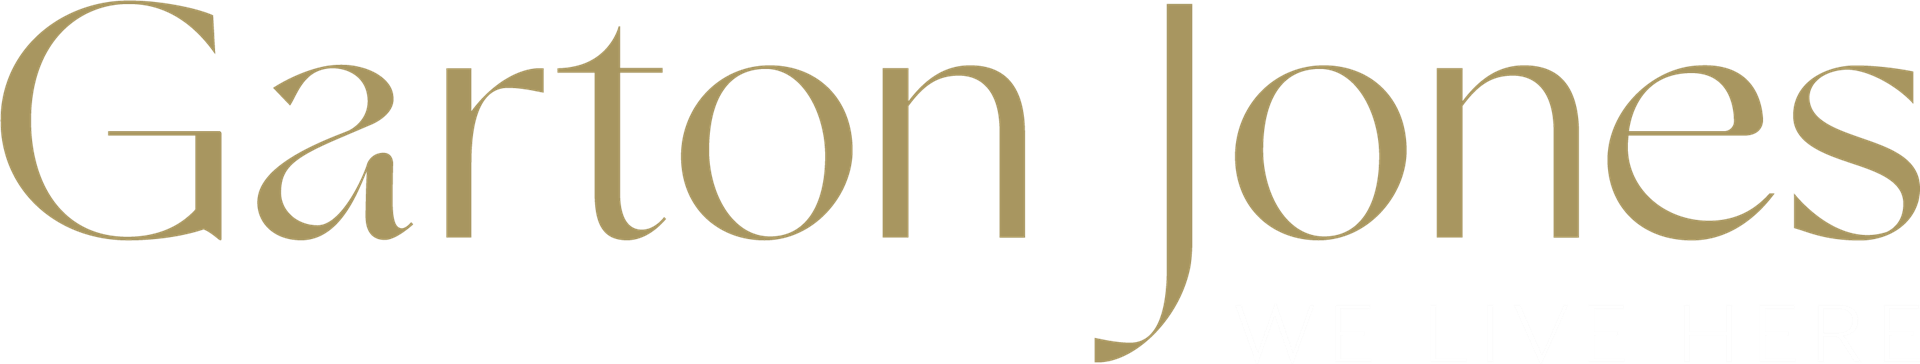 Garton Jones main logo